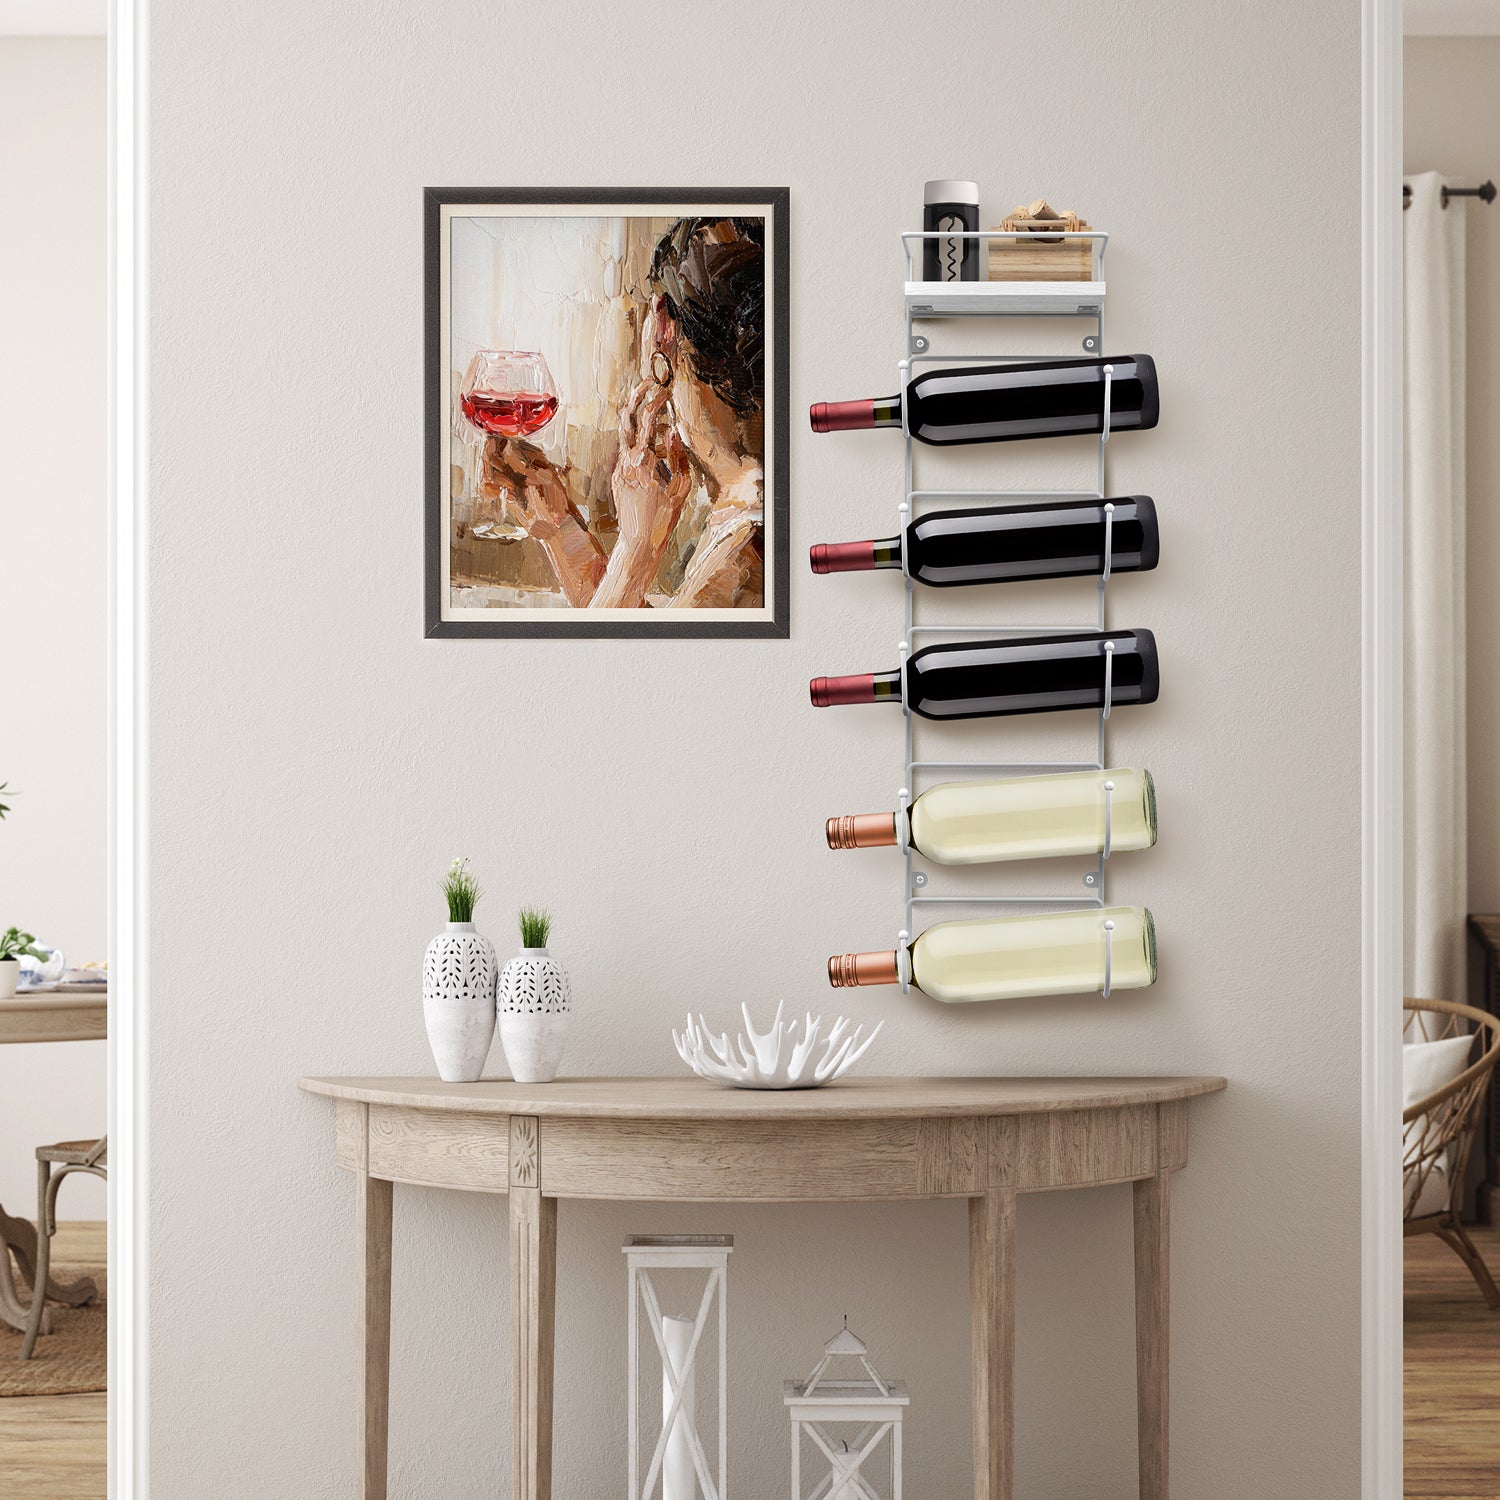 Sorbus Towel Rack Holder Set - Wall Mounted Storage Organizer for Towels, Washcloths, Hand Towels, Linens, Ideal for Bathroom, Spa, Salon, Modern